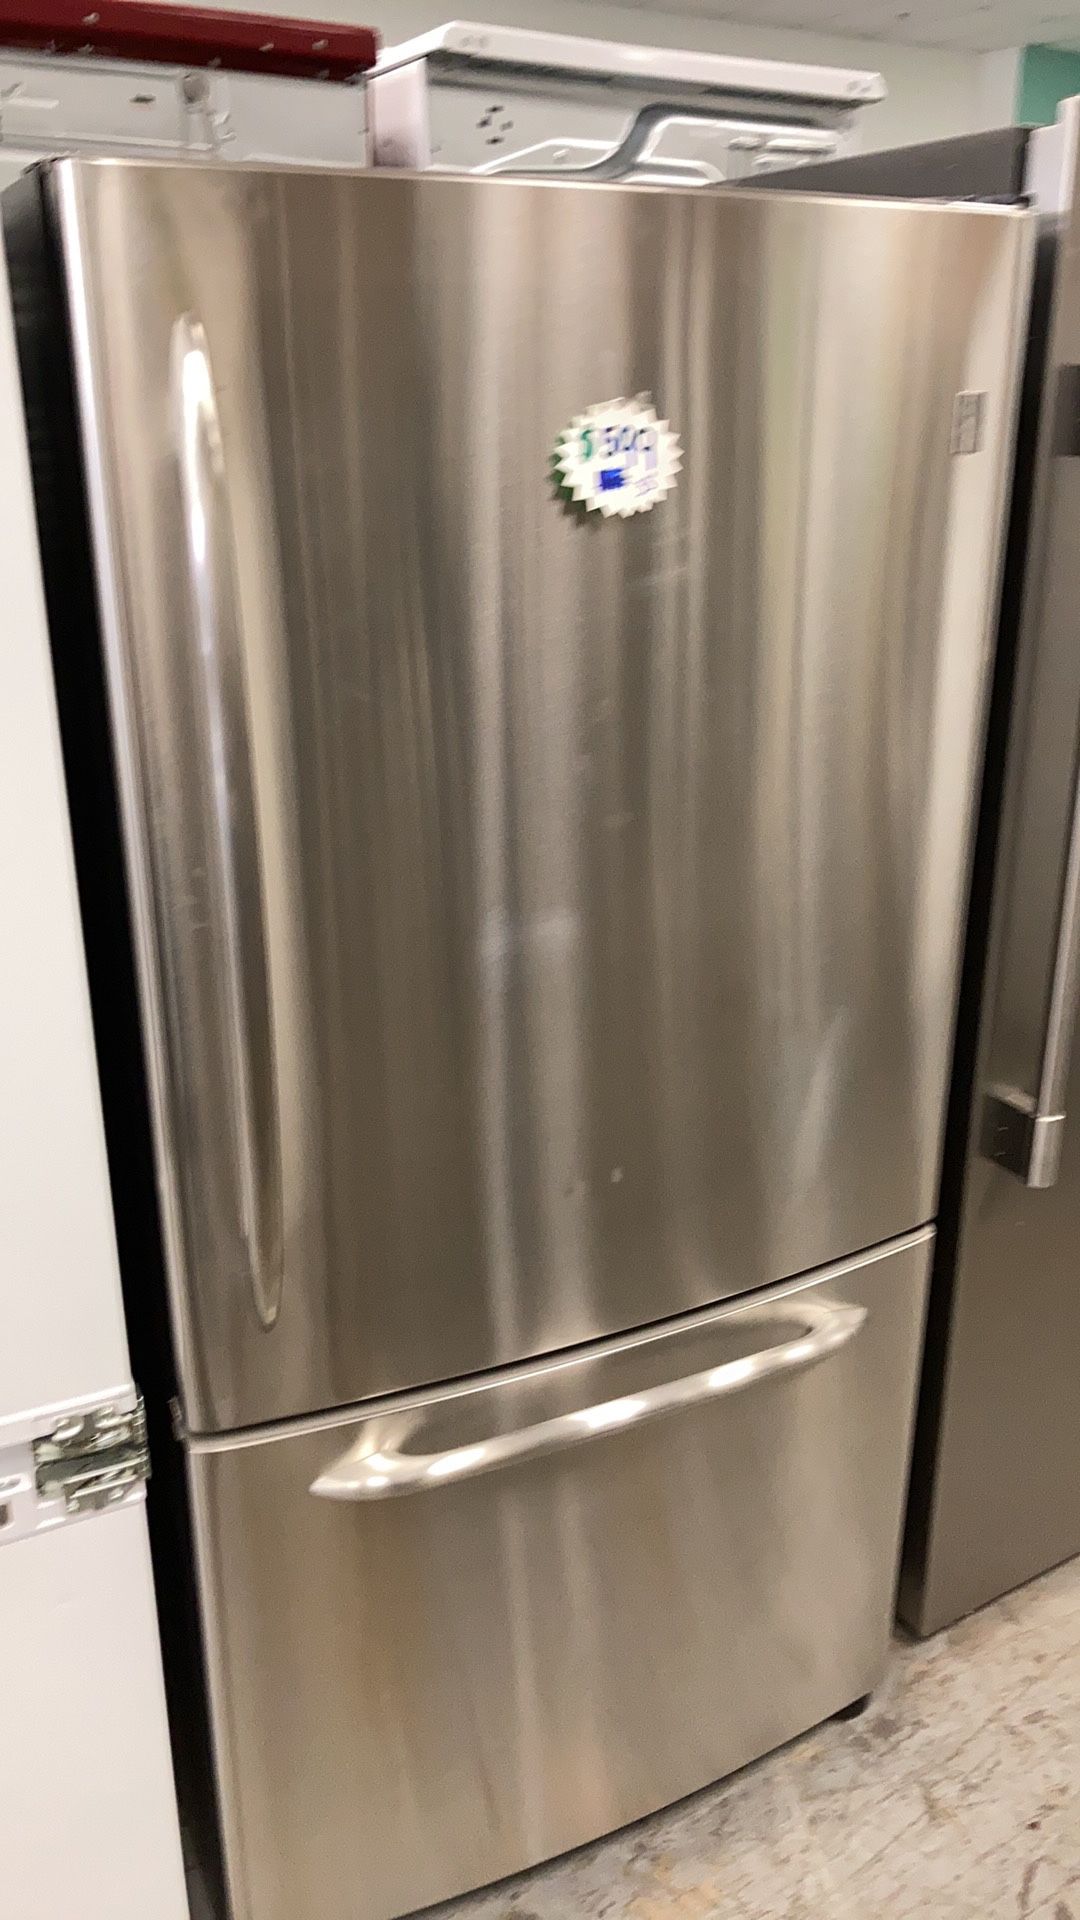 33” Bottom Freezer Refrigerator Working Perfectly With 4 Months Warranty 